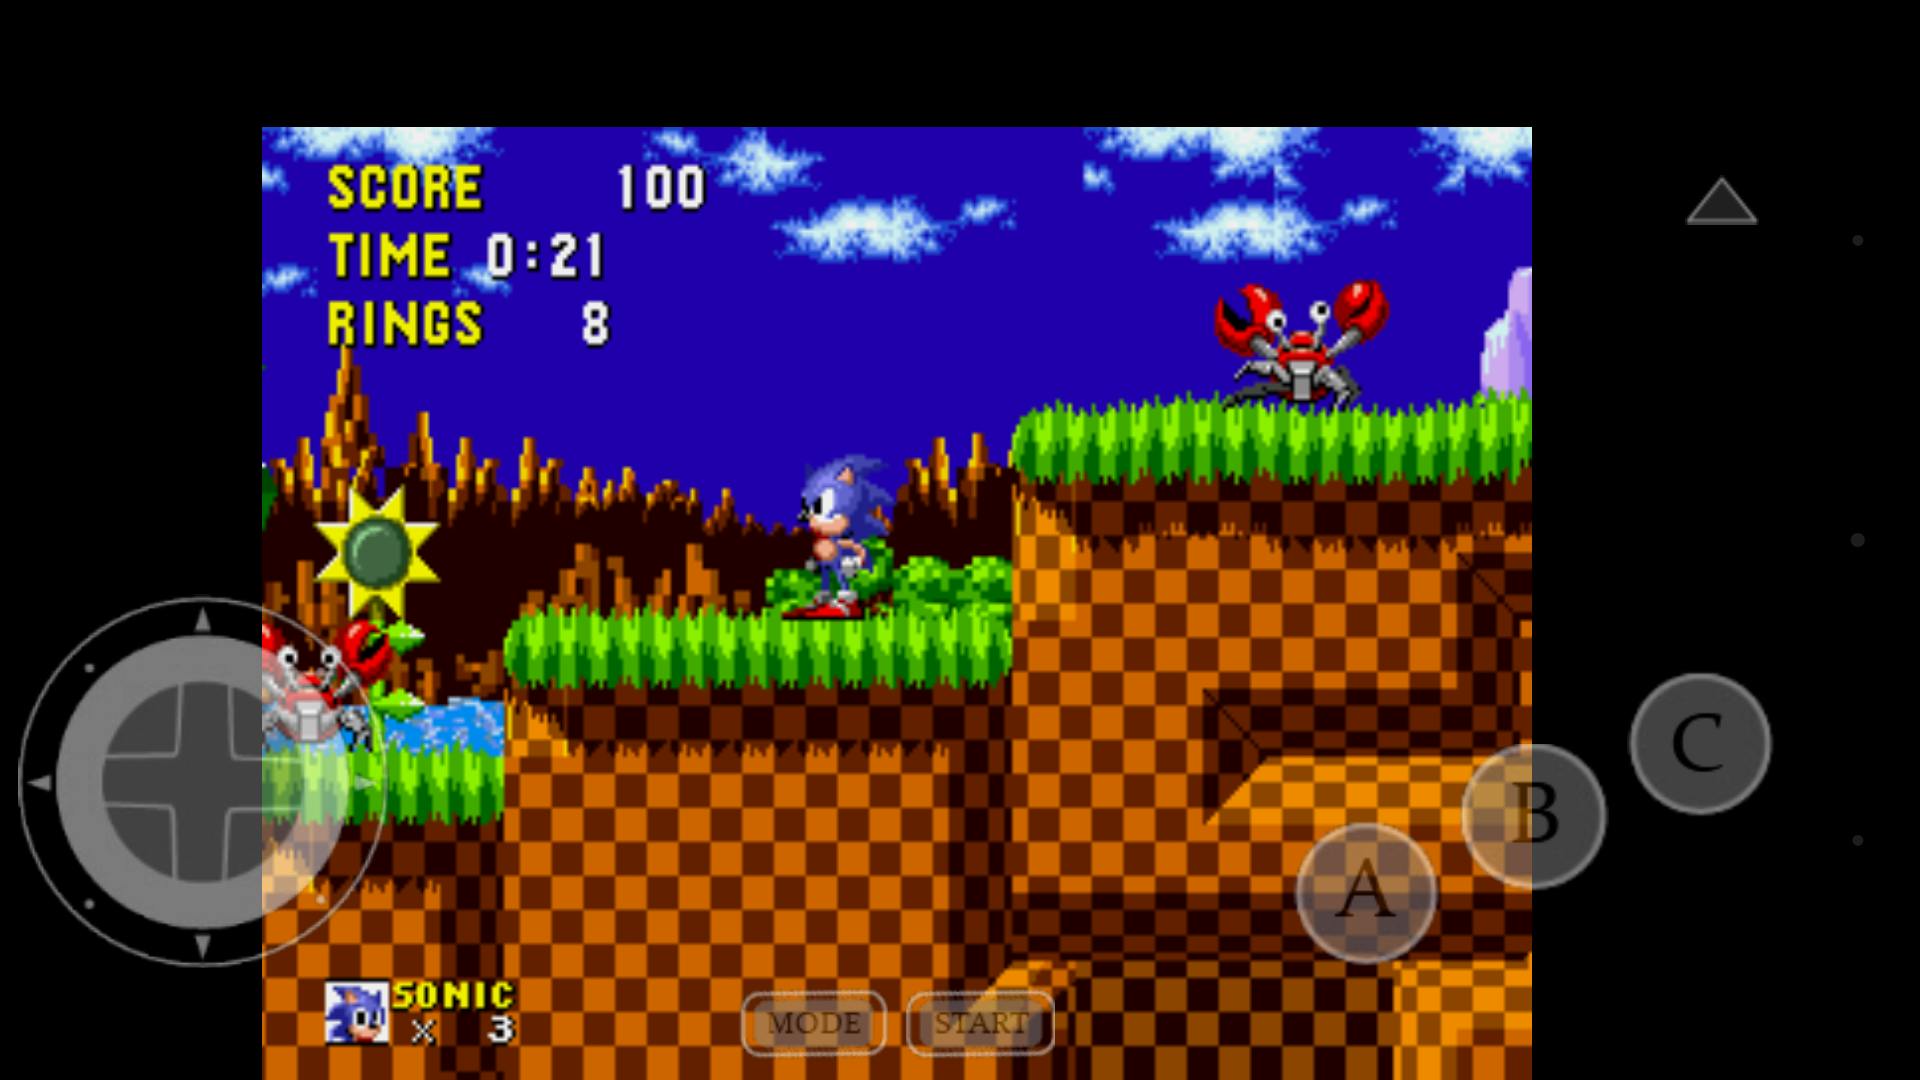 "Sonic the Hedgehog" emulated on MD.emu